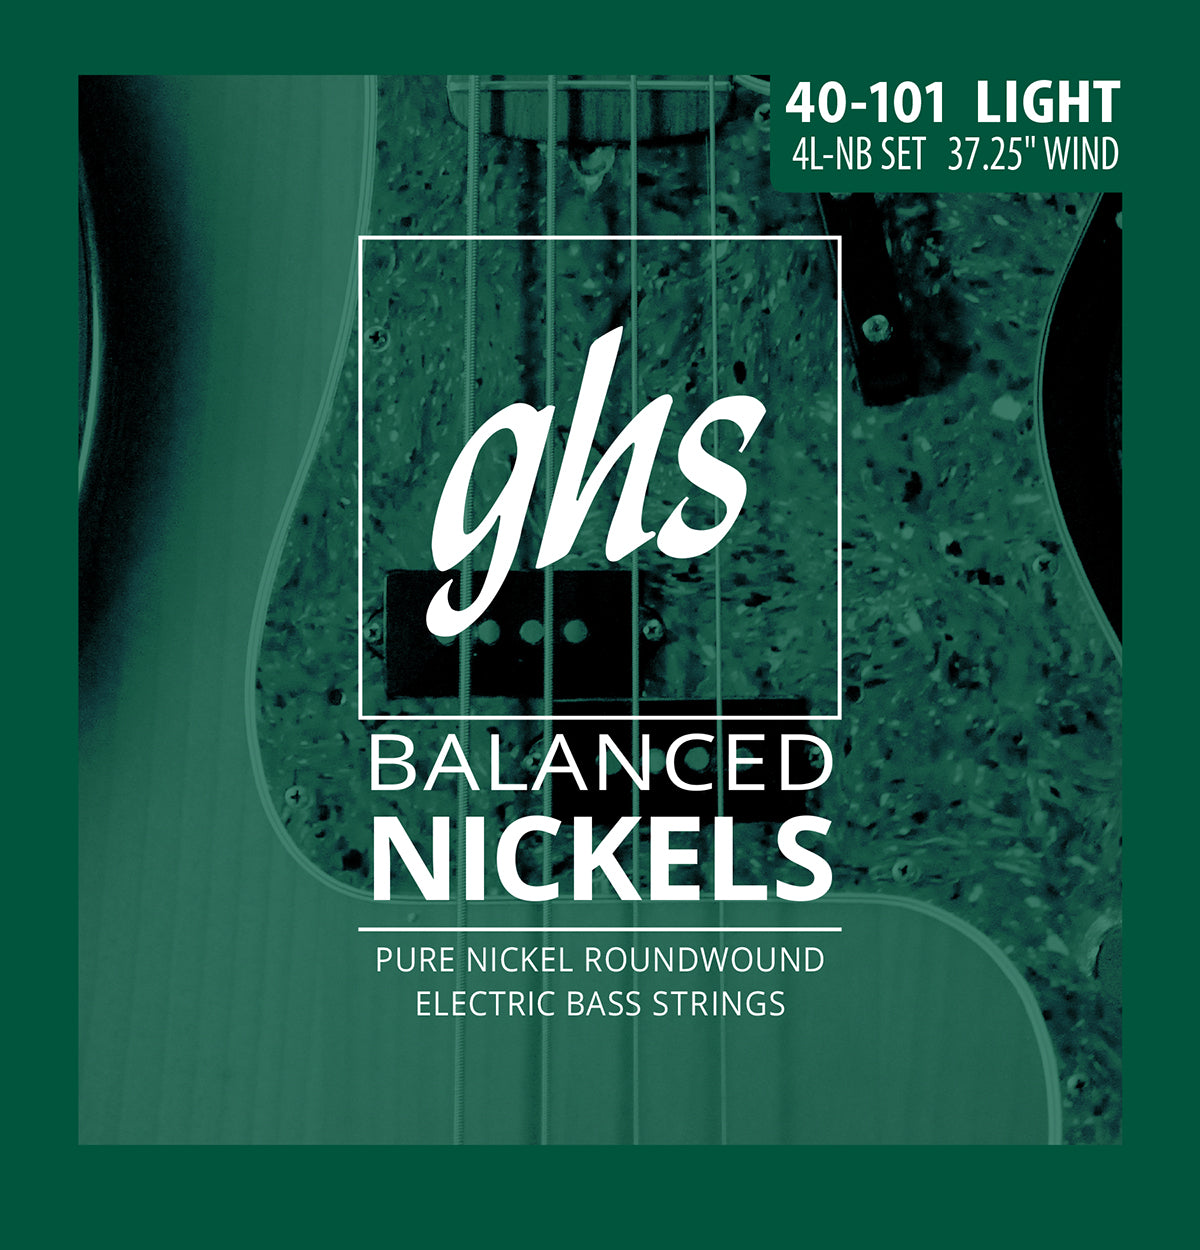 GHS Balanced Nickels, 4-String 40-101, 4L-NB